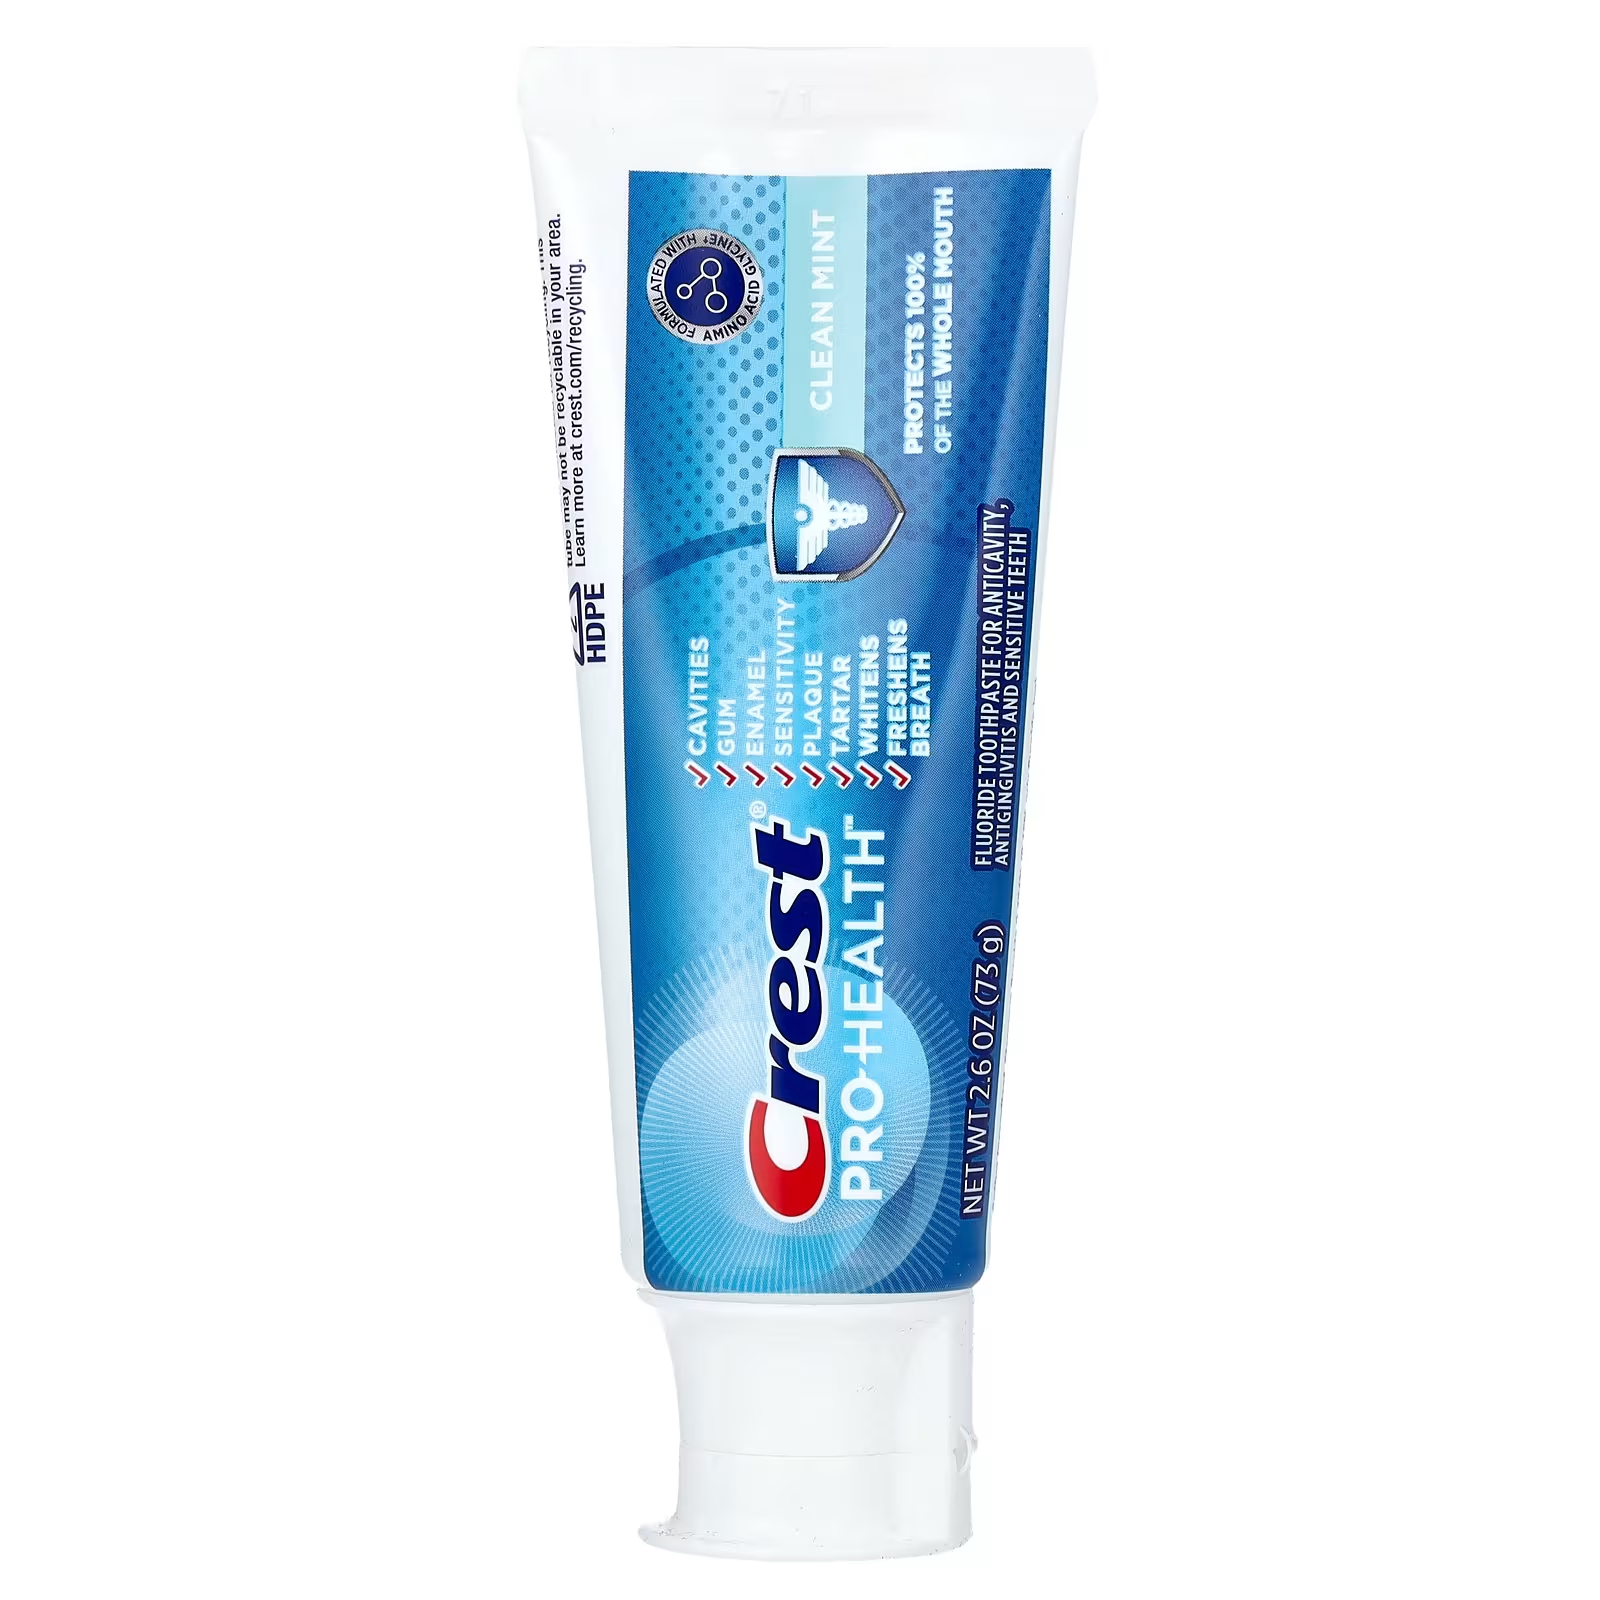 Зубная паста с фтором Crest Pro-Health чистая мята, 73 г цена и фото